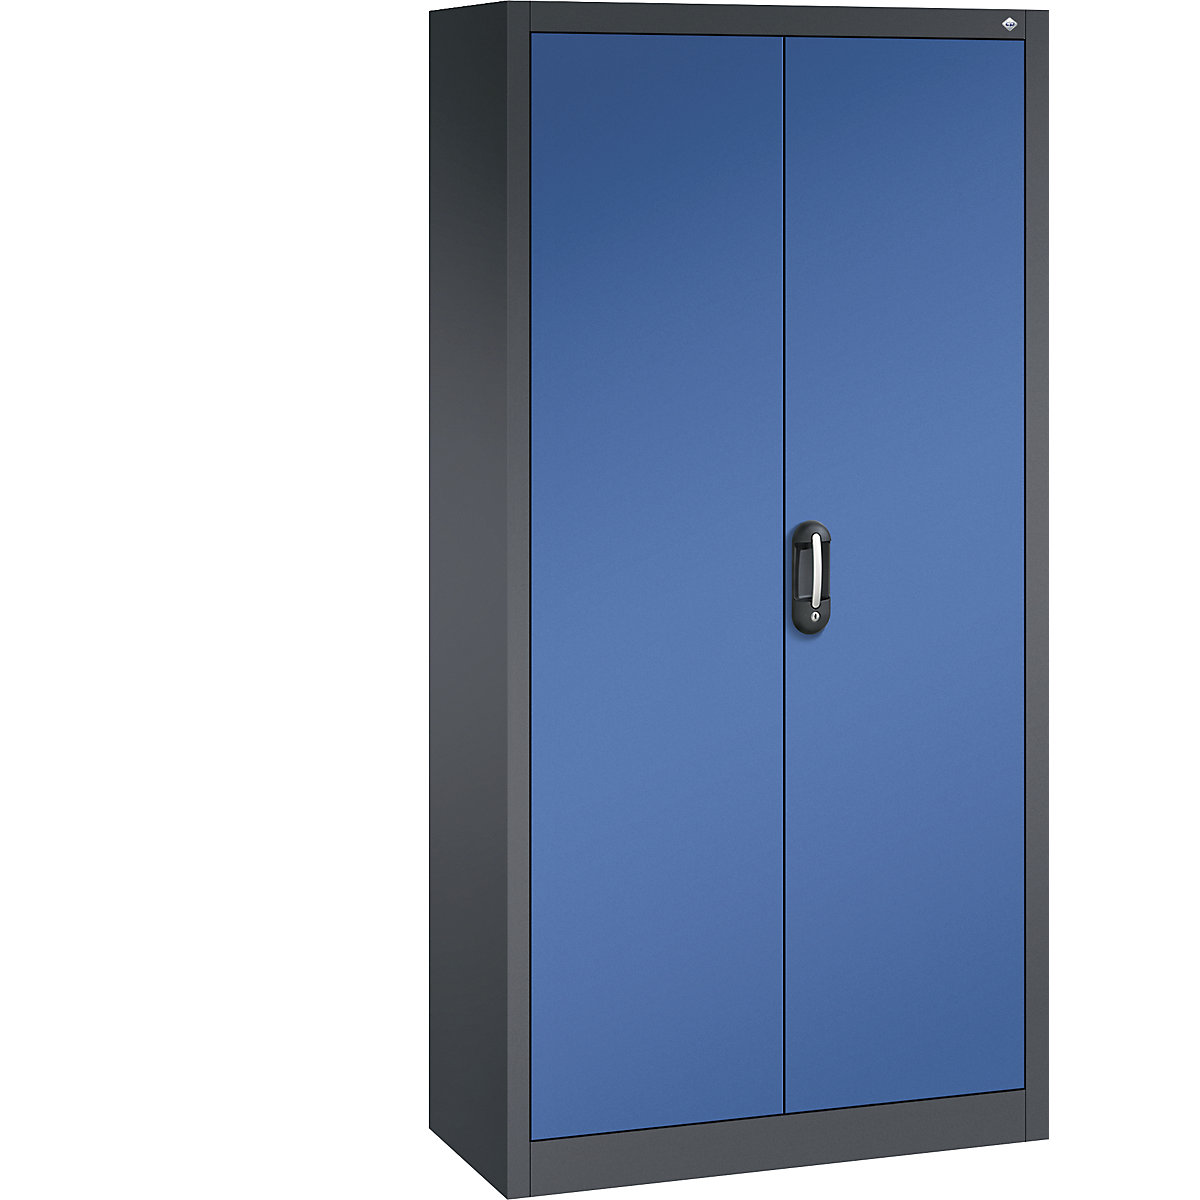 ACURADO universal cupboard – C+P, WxD 930 x 400 mm, black grey / gentian blue, 2+ items-17